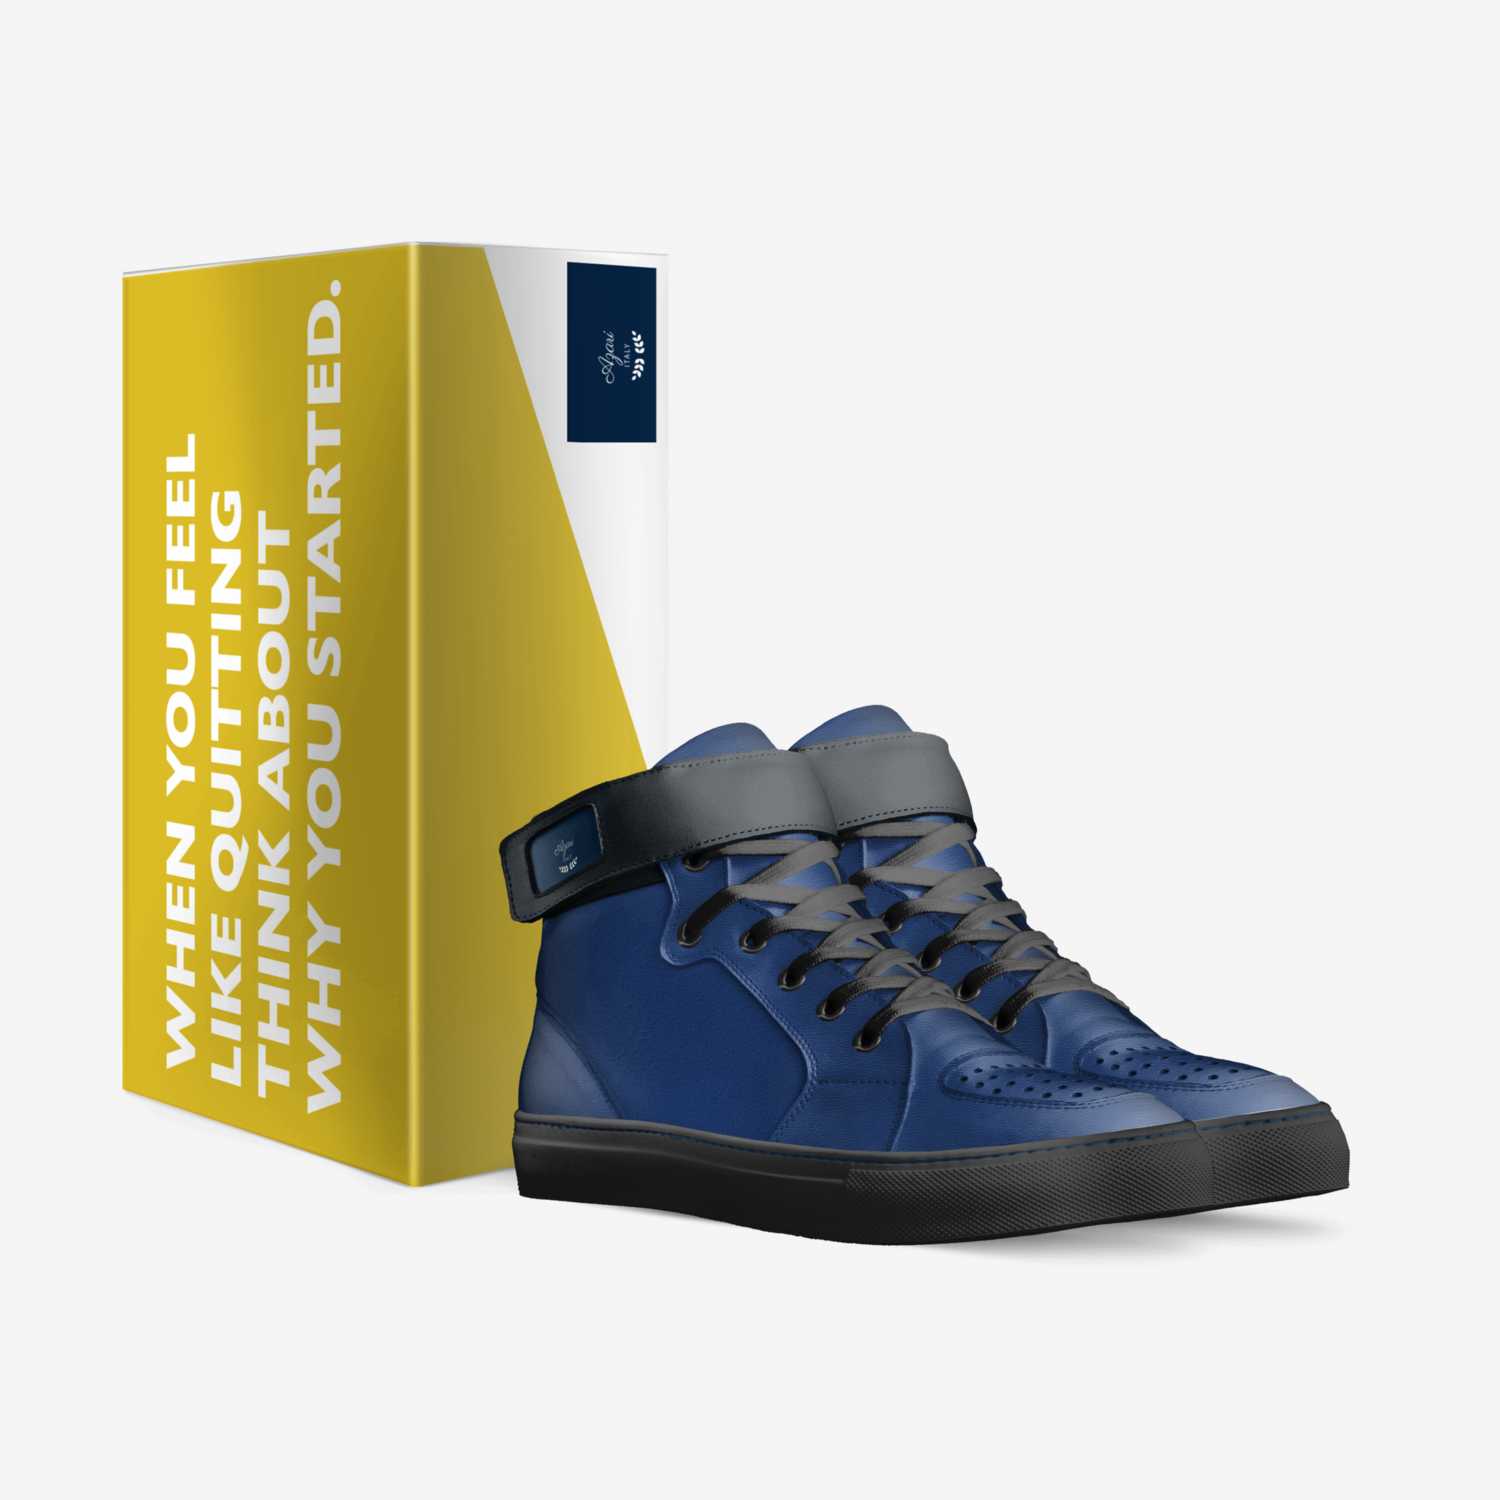 Azari  custom made in Italy shoes by Quinteze Vetaw | Box view